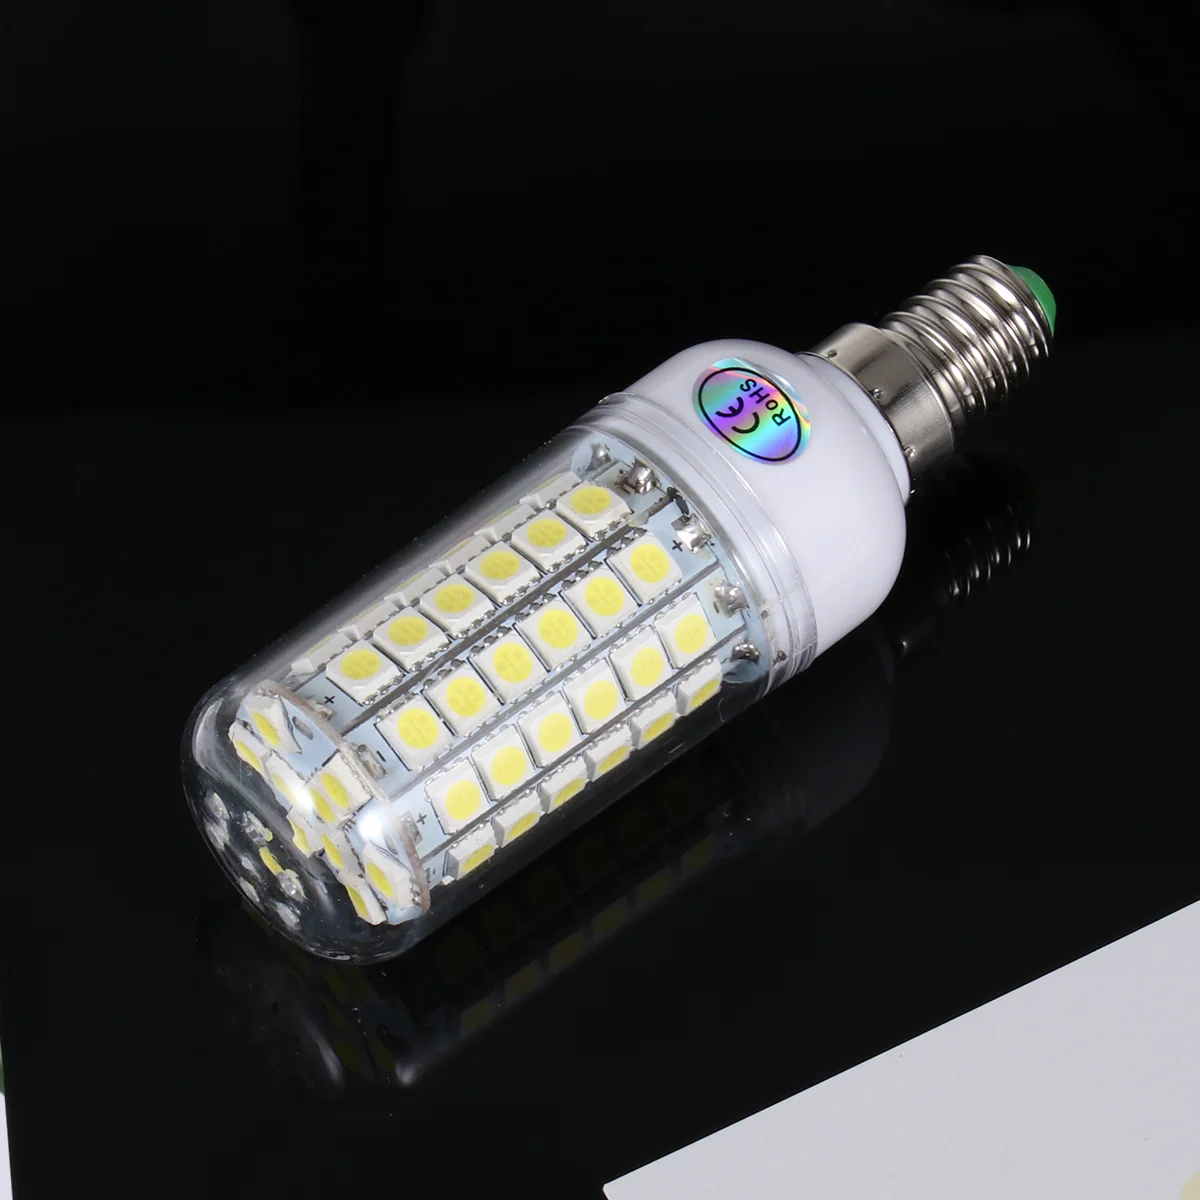 

E14 AC 220-240V 10W 1020LM SMD 5050 69-LED 6000K Corn Bulb Light Lamp (White)